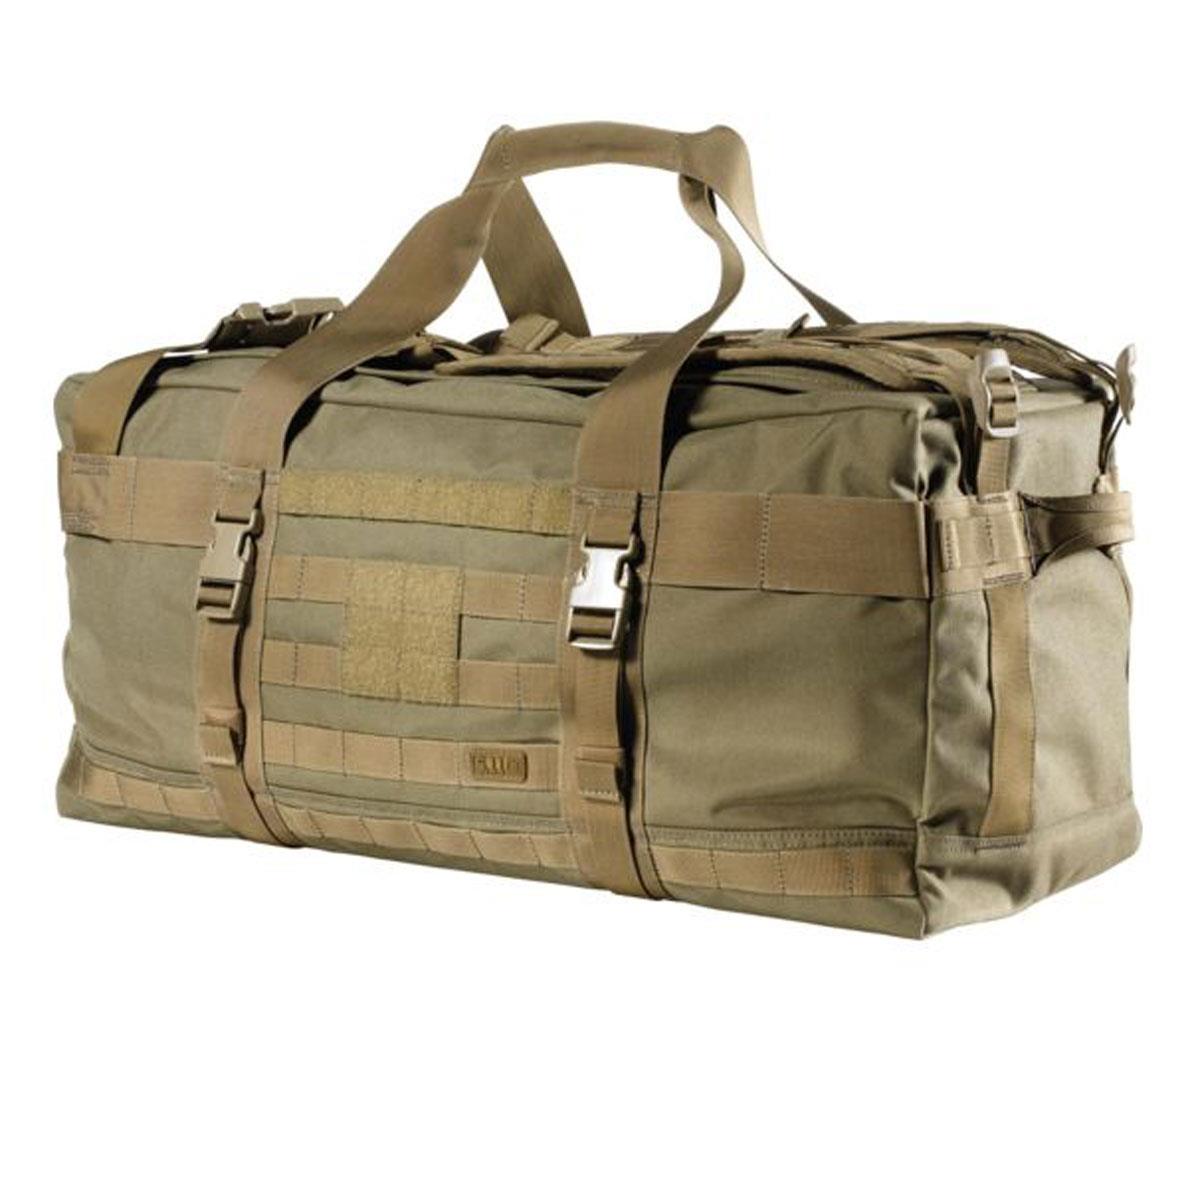 5.11 Tactical RUSH LBD LIMA Duffel Bag, Sandstone -  56294-328-1 SZ